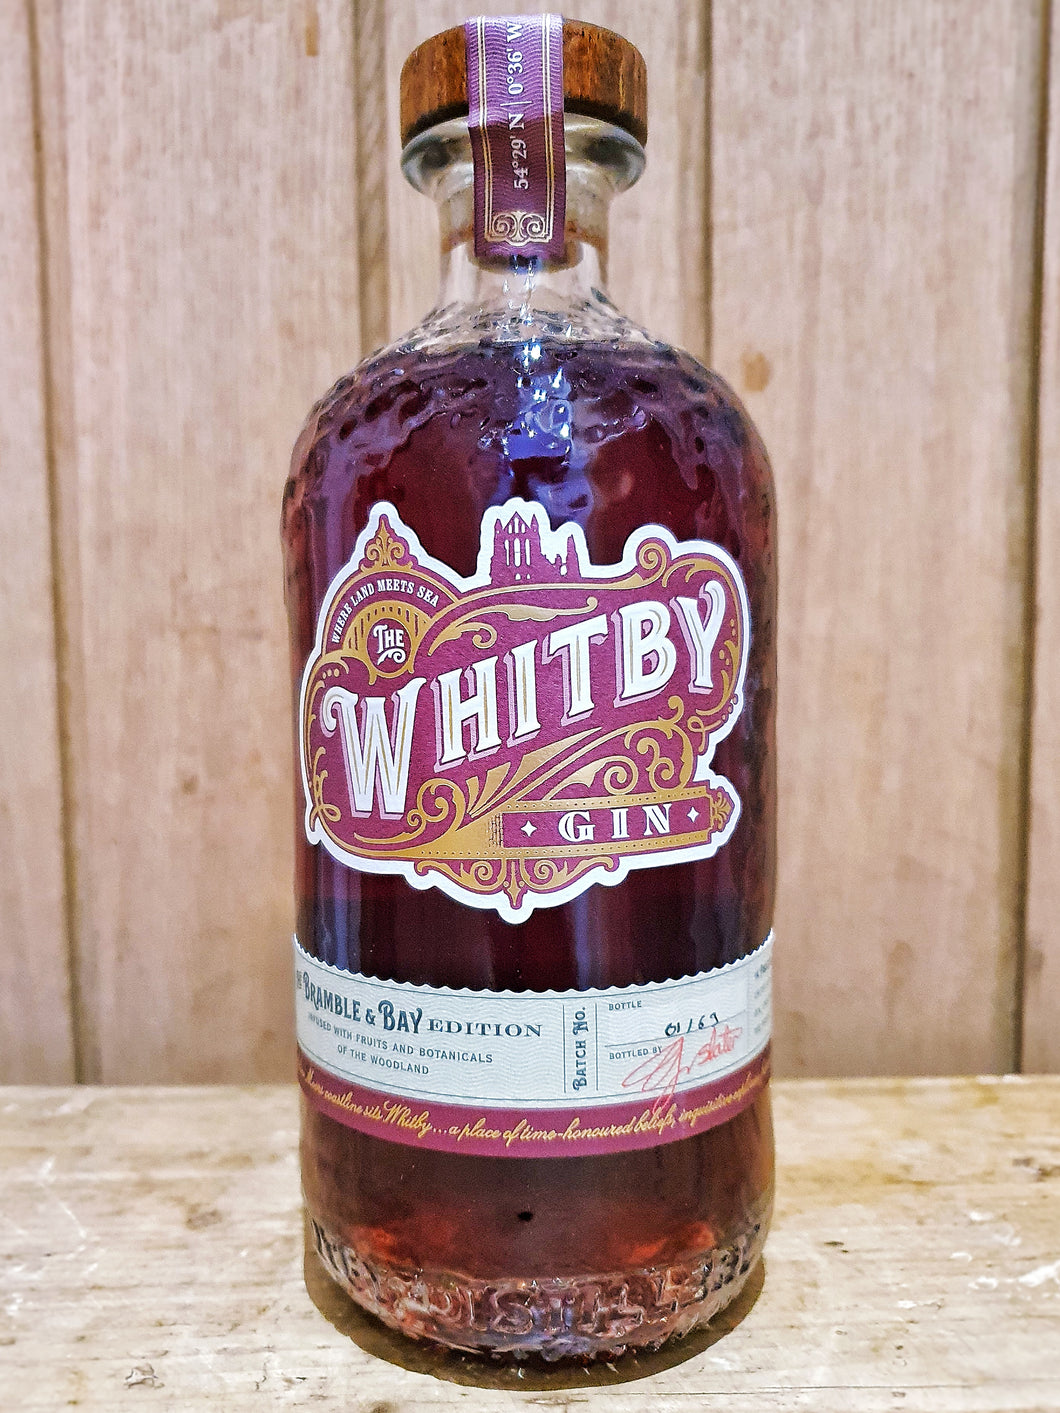 Whitby Gin - Bramble & Bay Edition